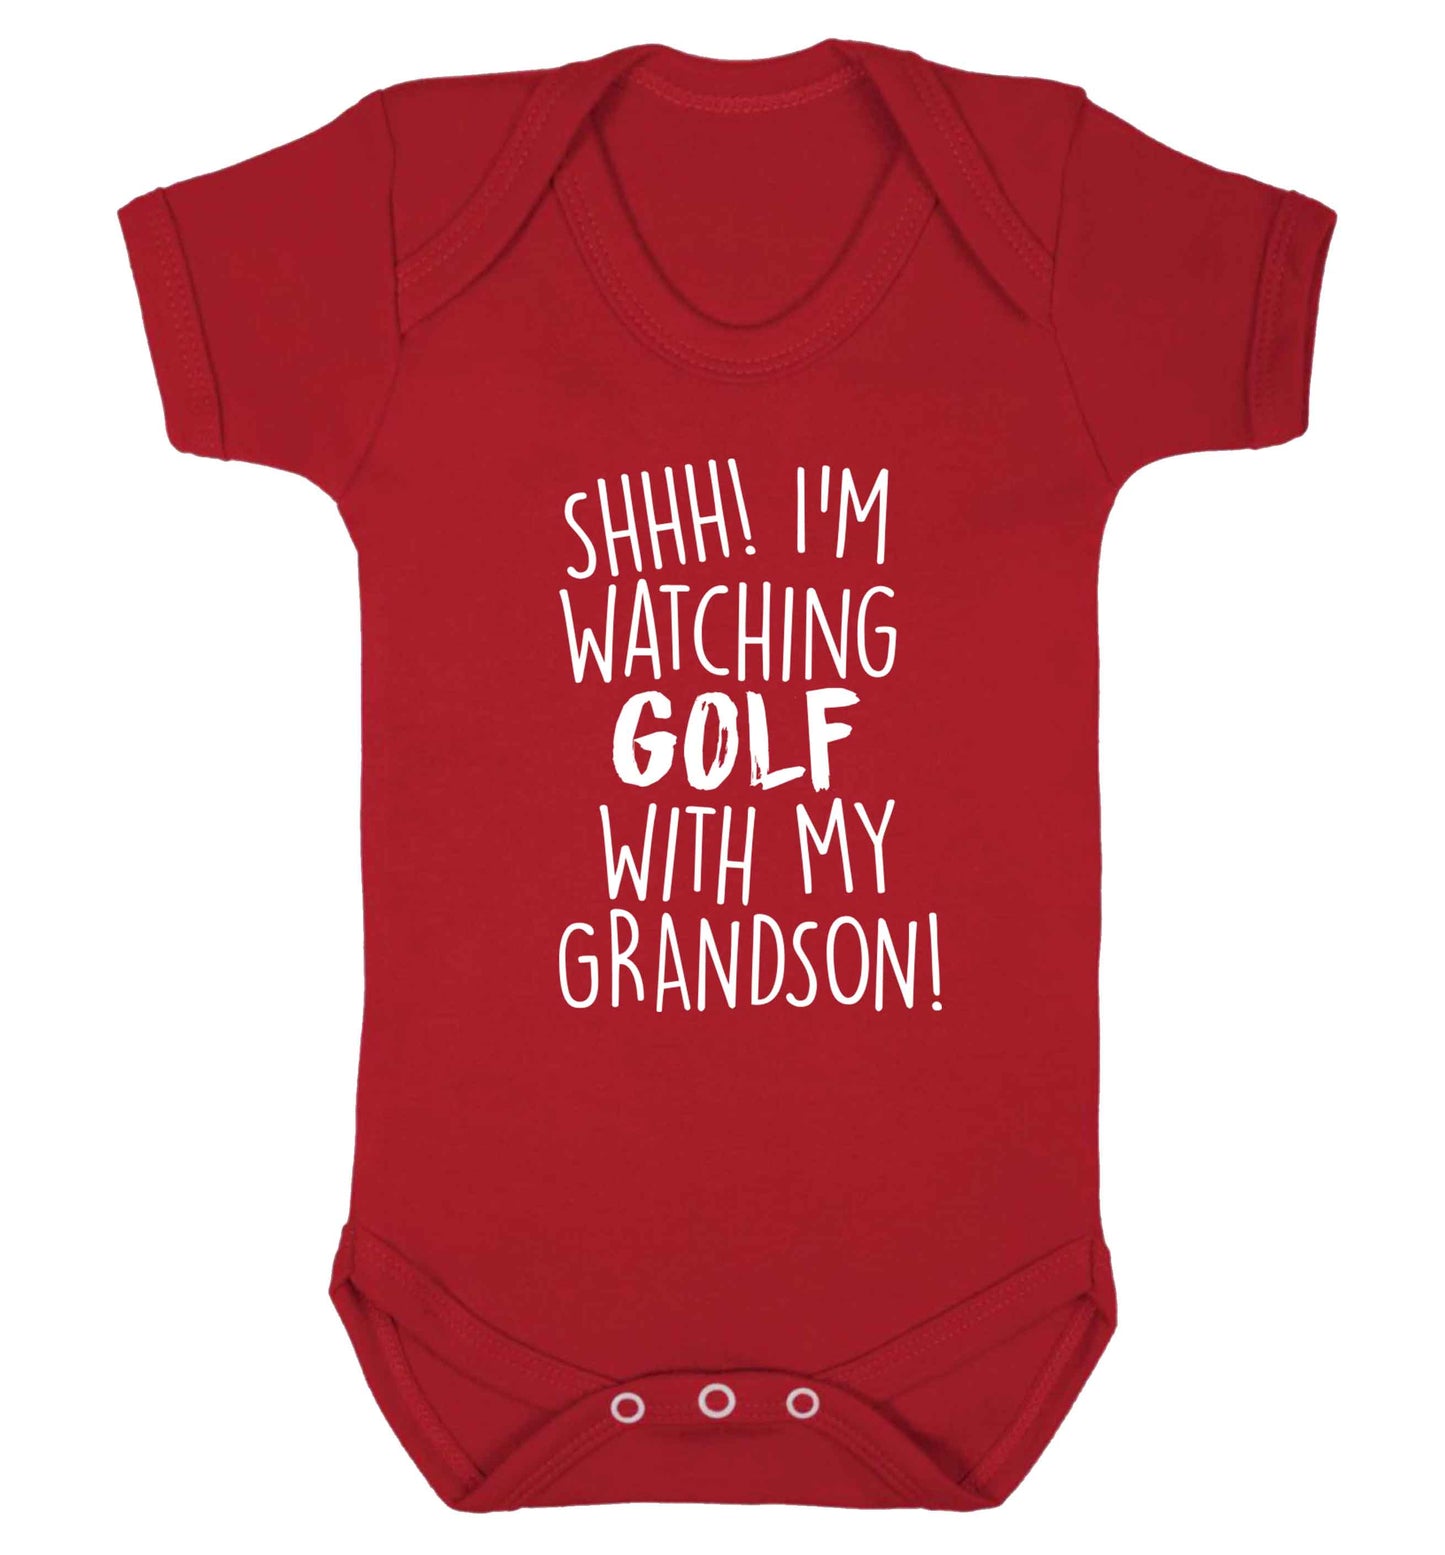 Shh I'm watching golf with my grandsonBaby Vest red 18-24 months